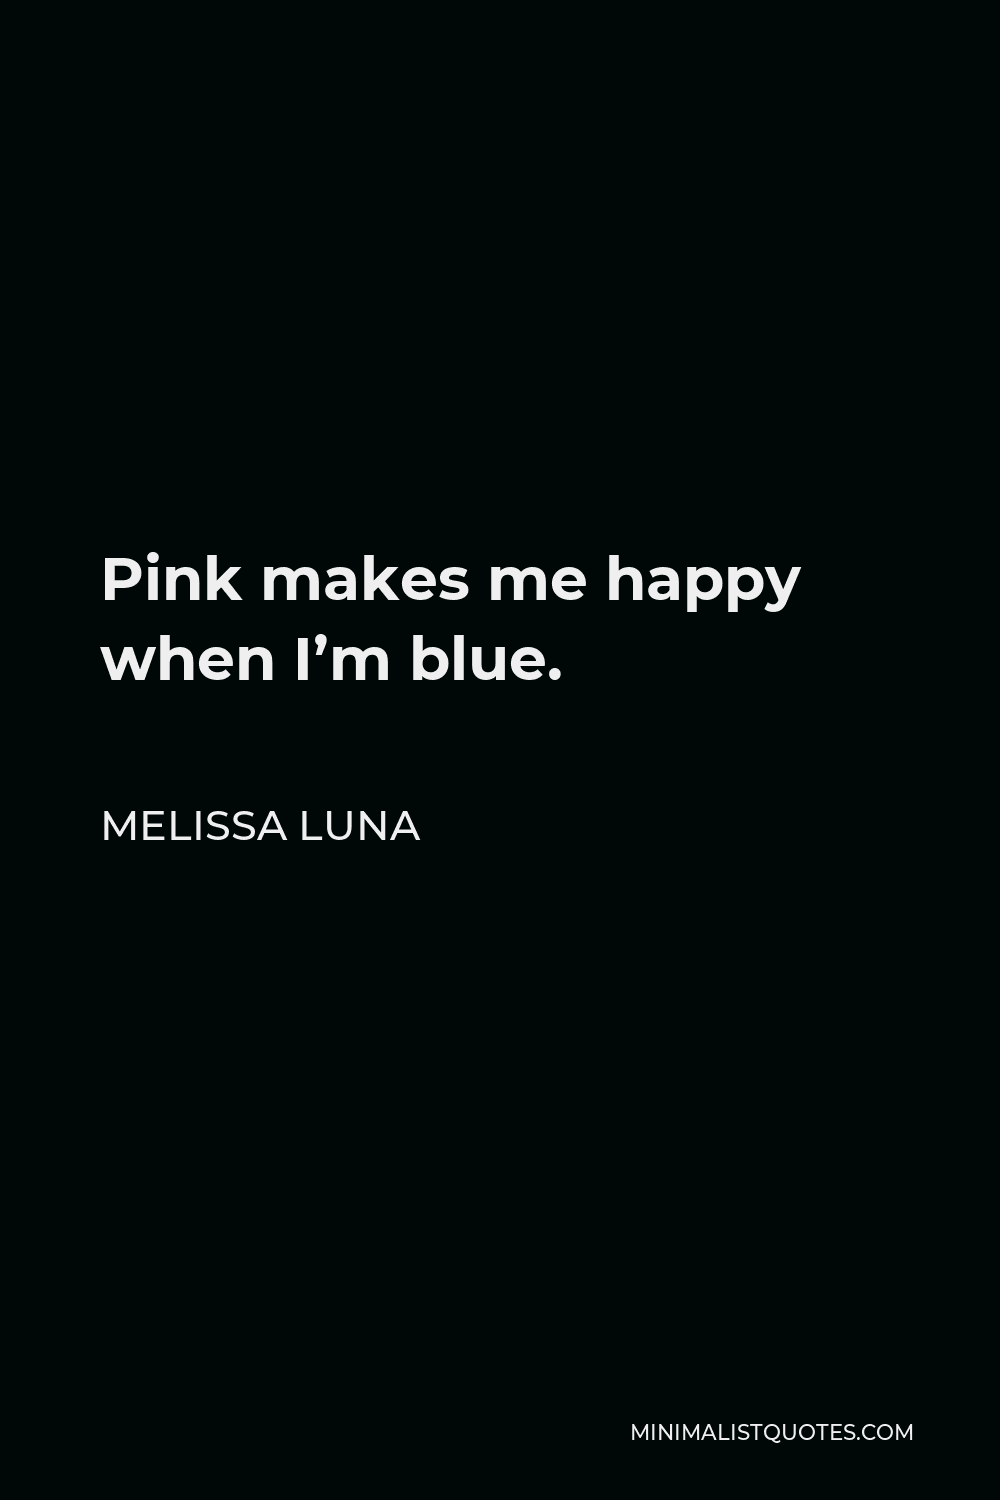 Melissa Luna Quote - Pink makes me happy when I’m blue.